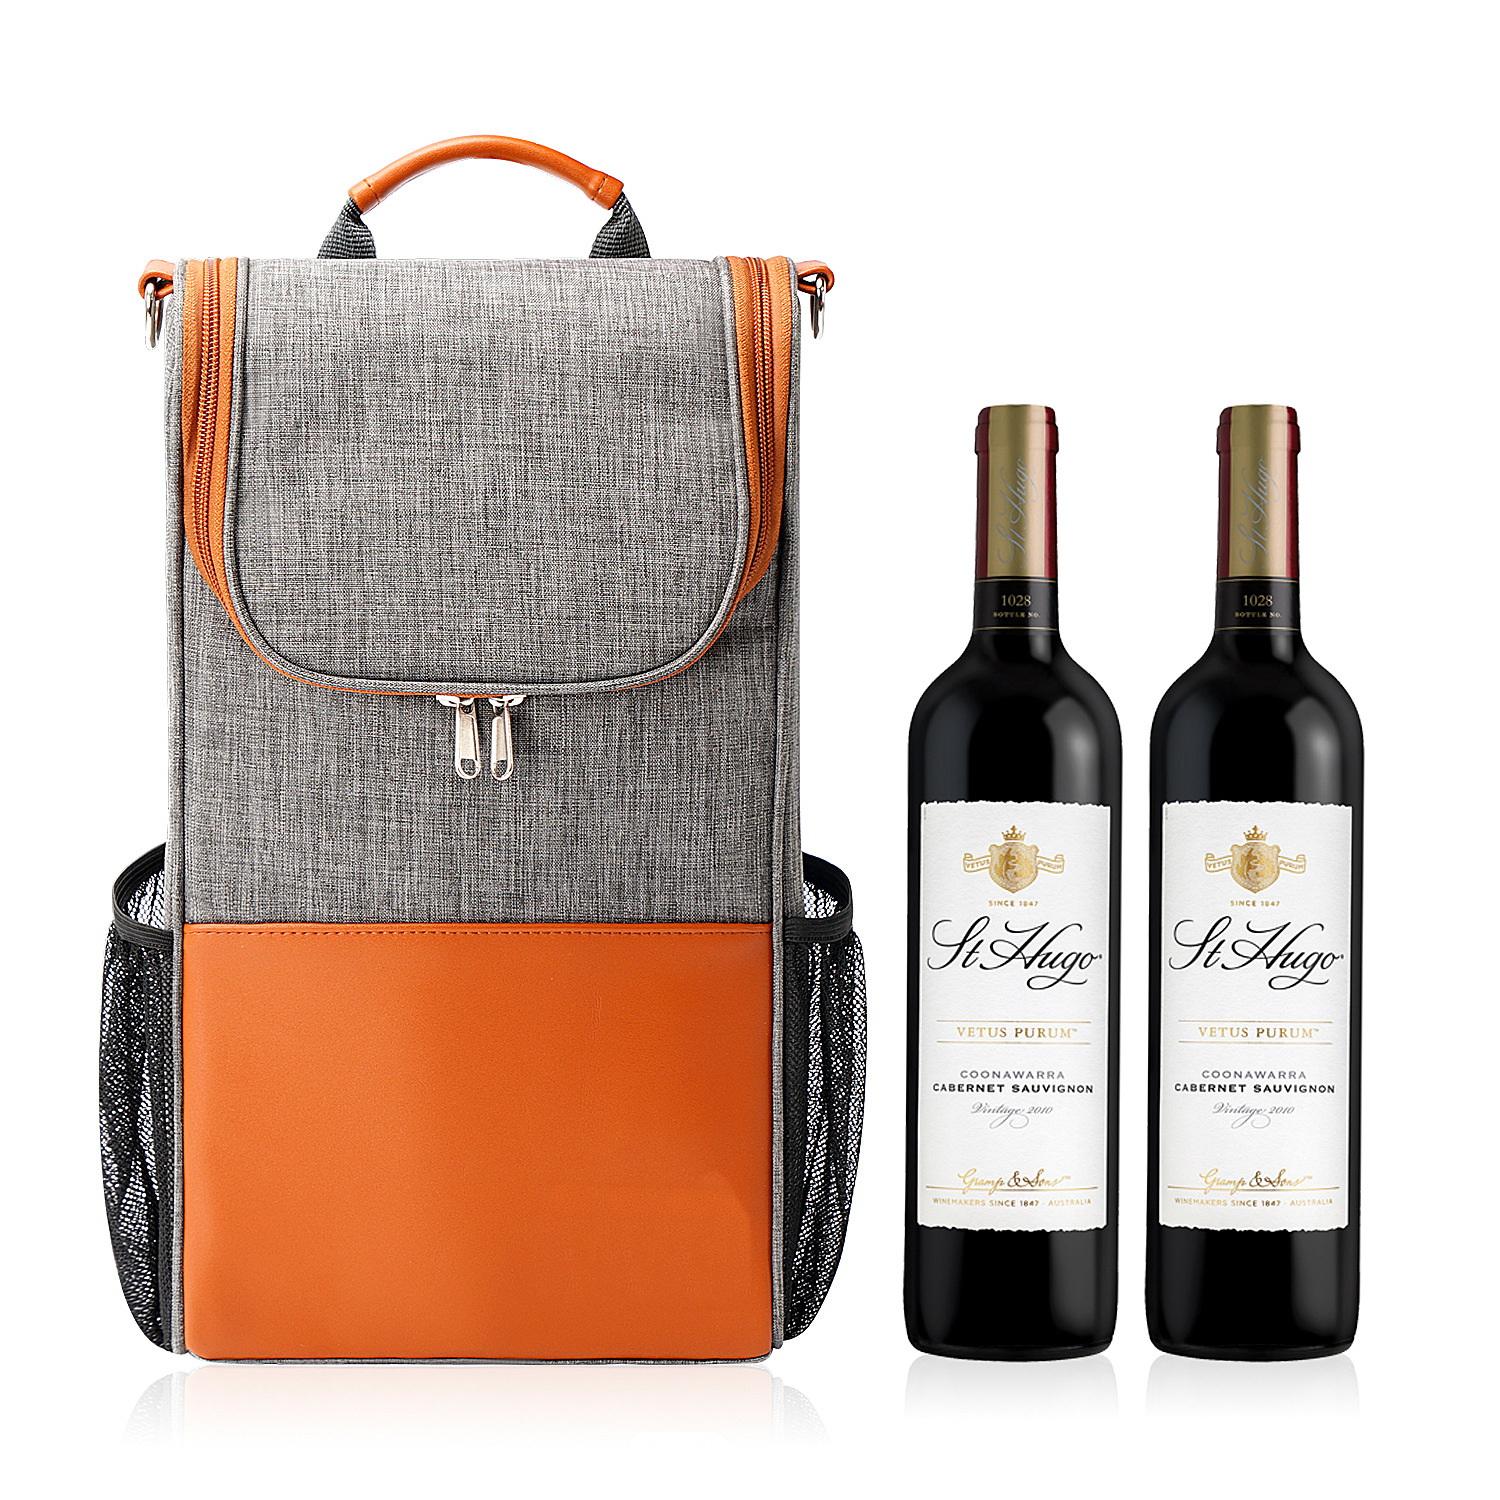 Bolsa de transporte de vino de 2 botellas, bolsa térmica para alimentos, bolsa de picnic impermeable